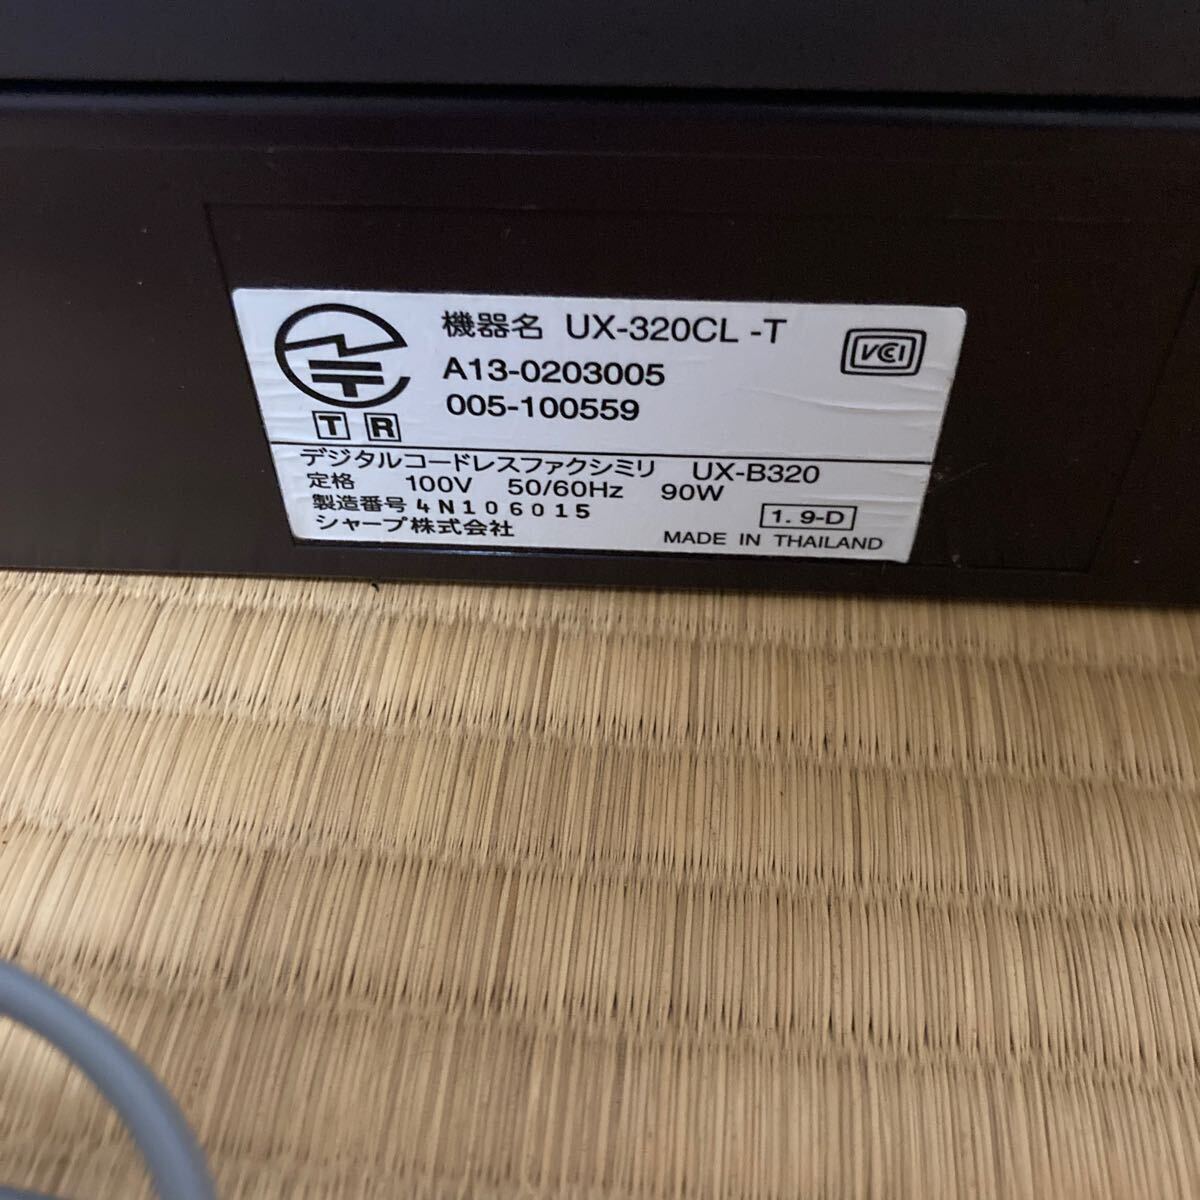  sharp digital cordless fax UX-320 cordless handset attached 